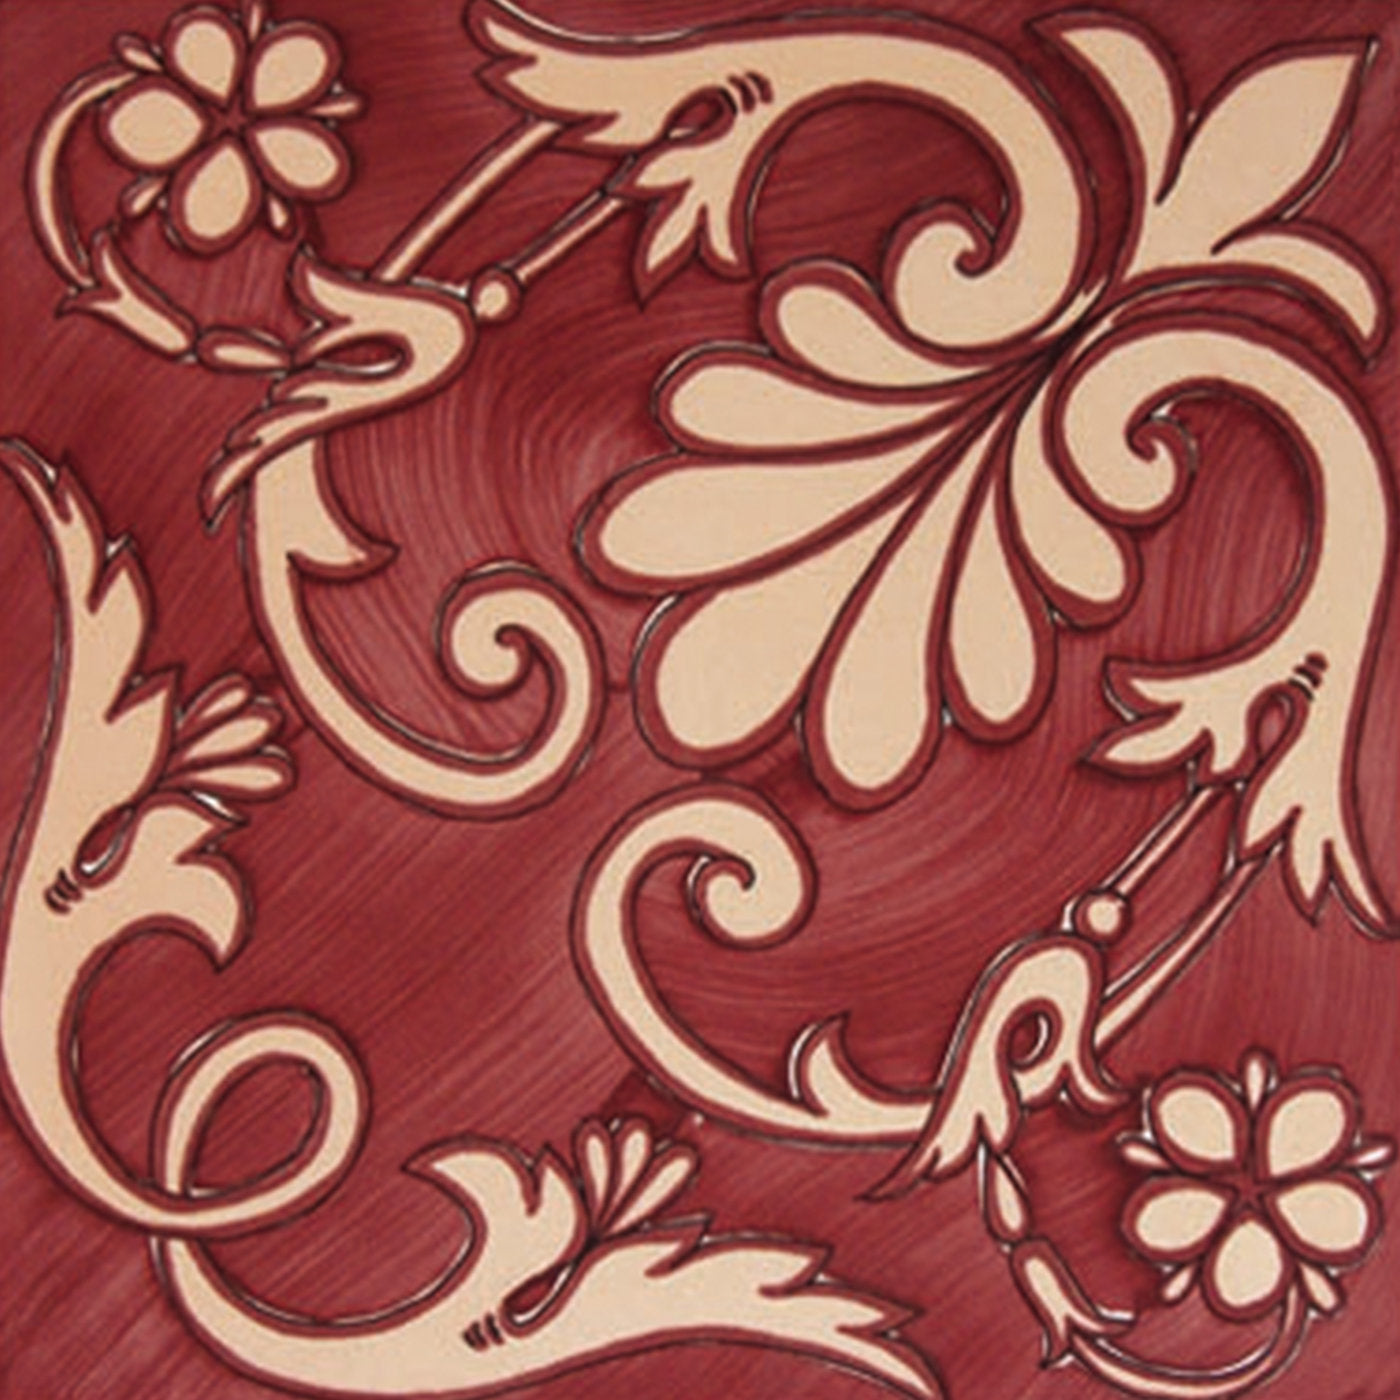 Set of 25 Ieranto Red Tiles Fiori Scuri Collection - Alternative view 1